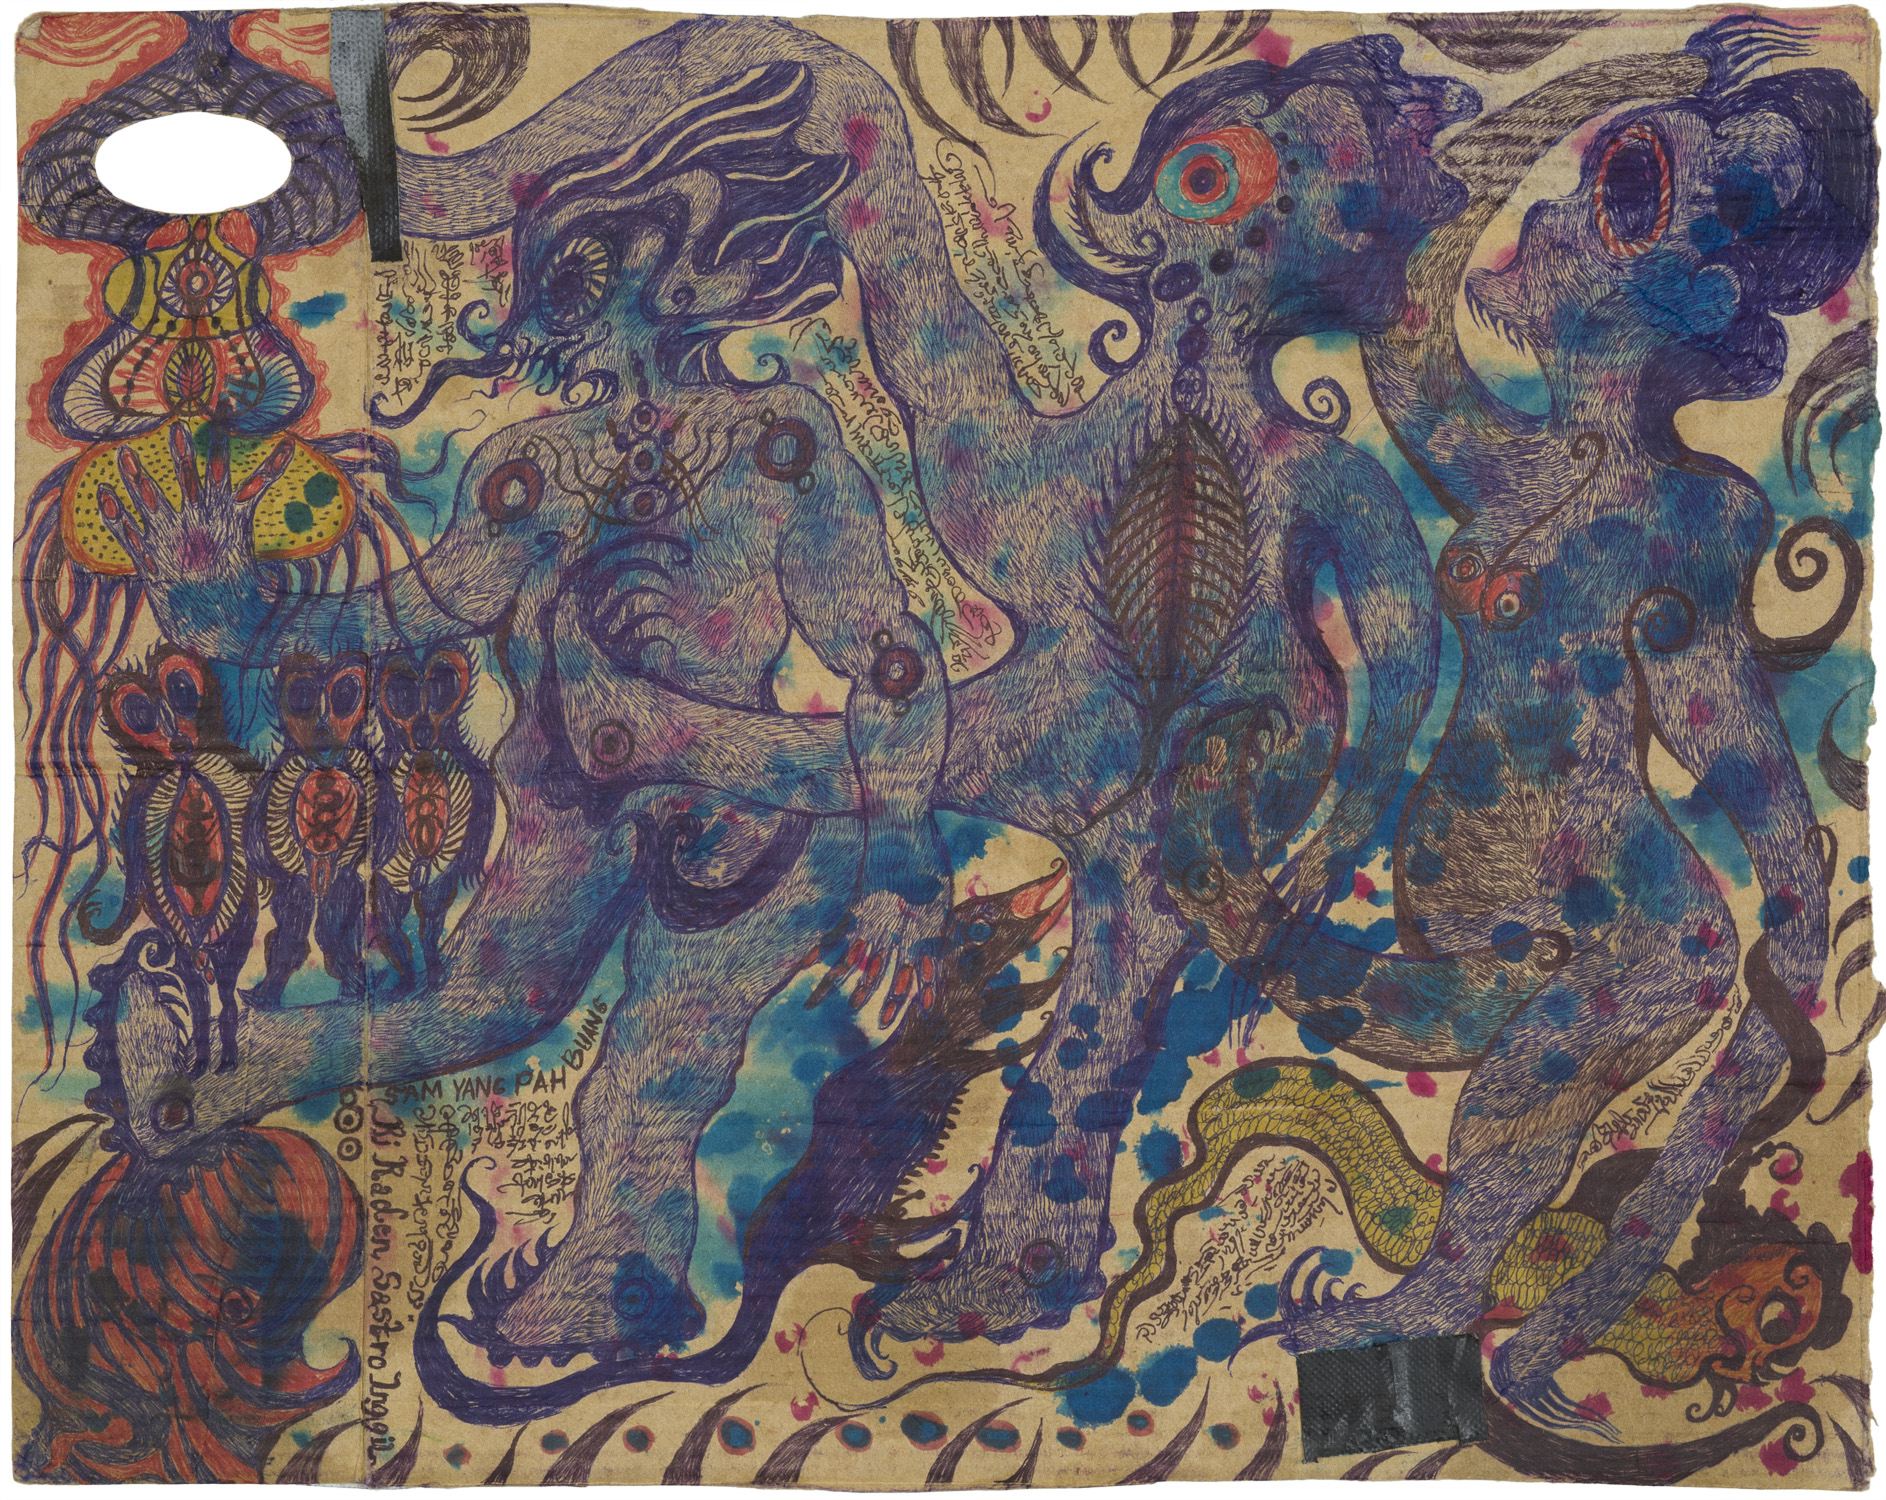   Noviadi Angkasapura    Untitled  , 2014 Ink and watercolor on cardboard 11.5 x 13.5 inches 29.2 x 34.3 cm NoA 135 